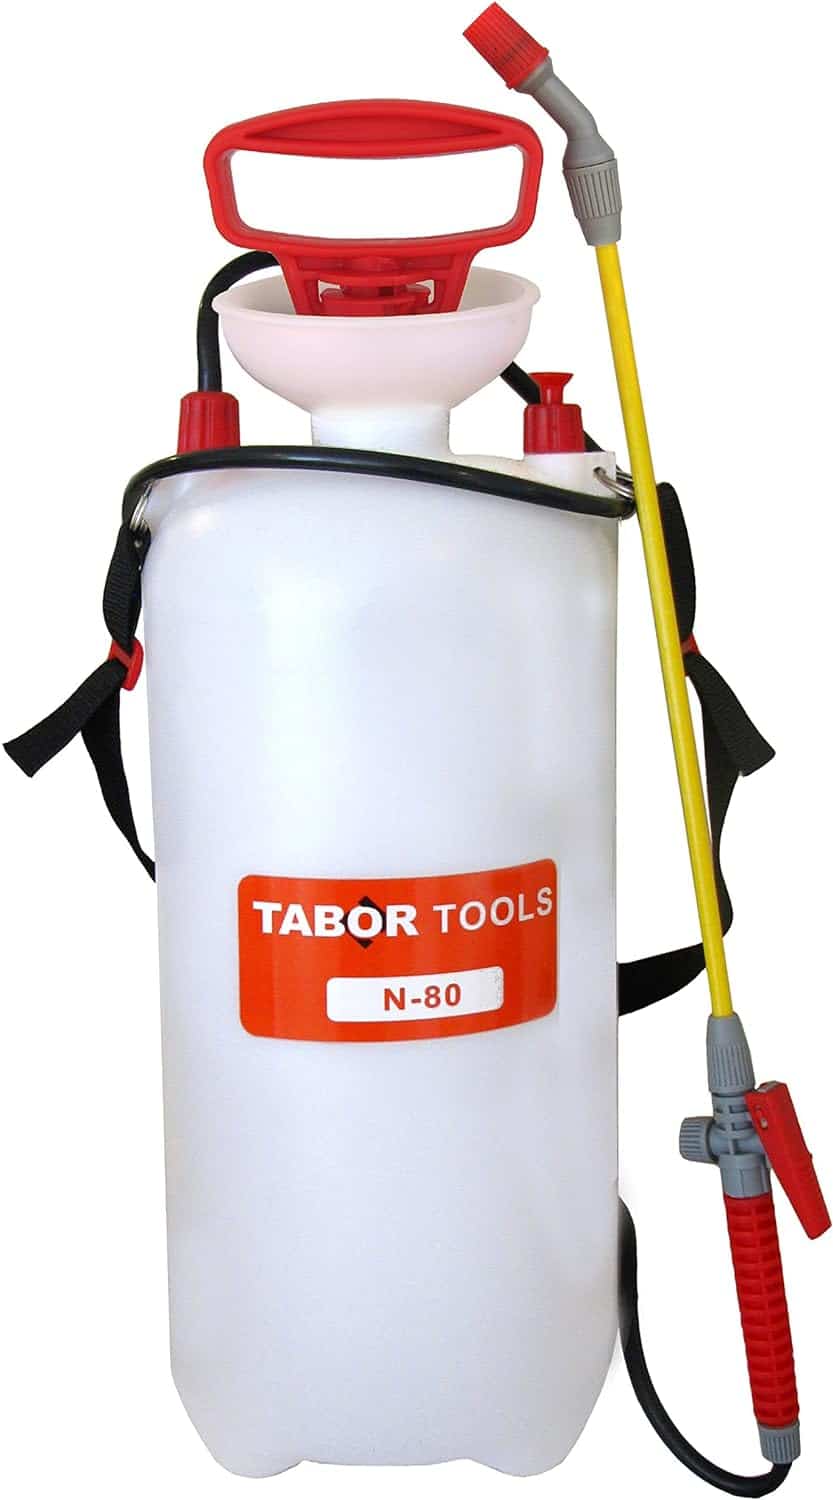 TABOR TOOLS 2.0 Lawn and Garden Pump Pressure Sprayer